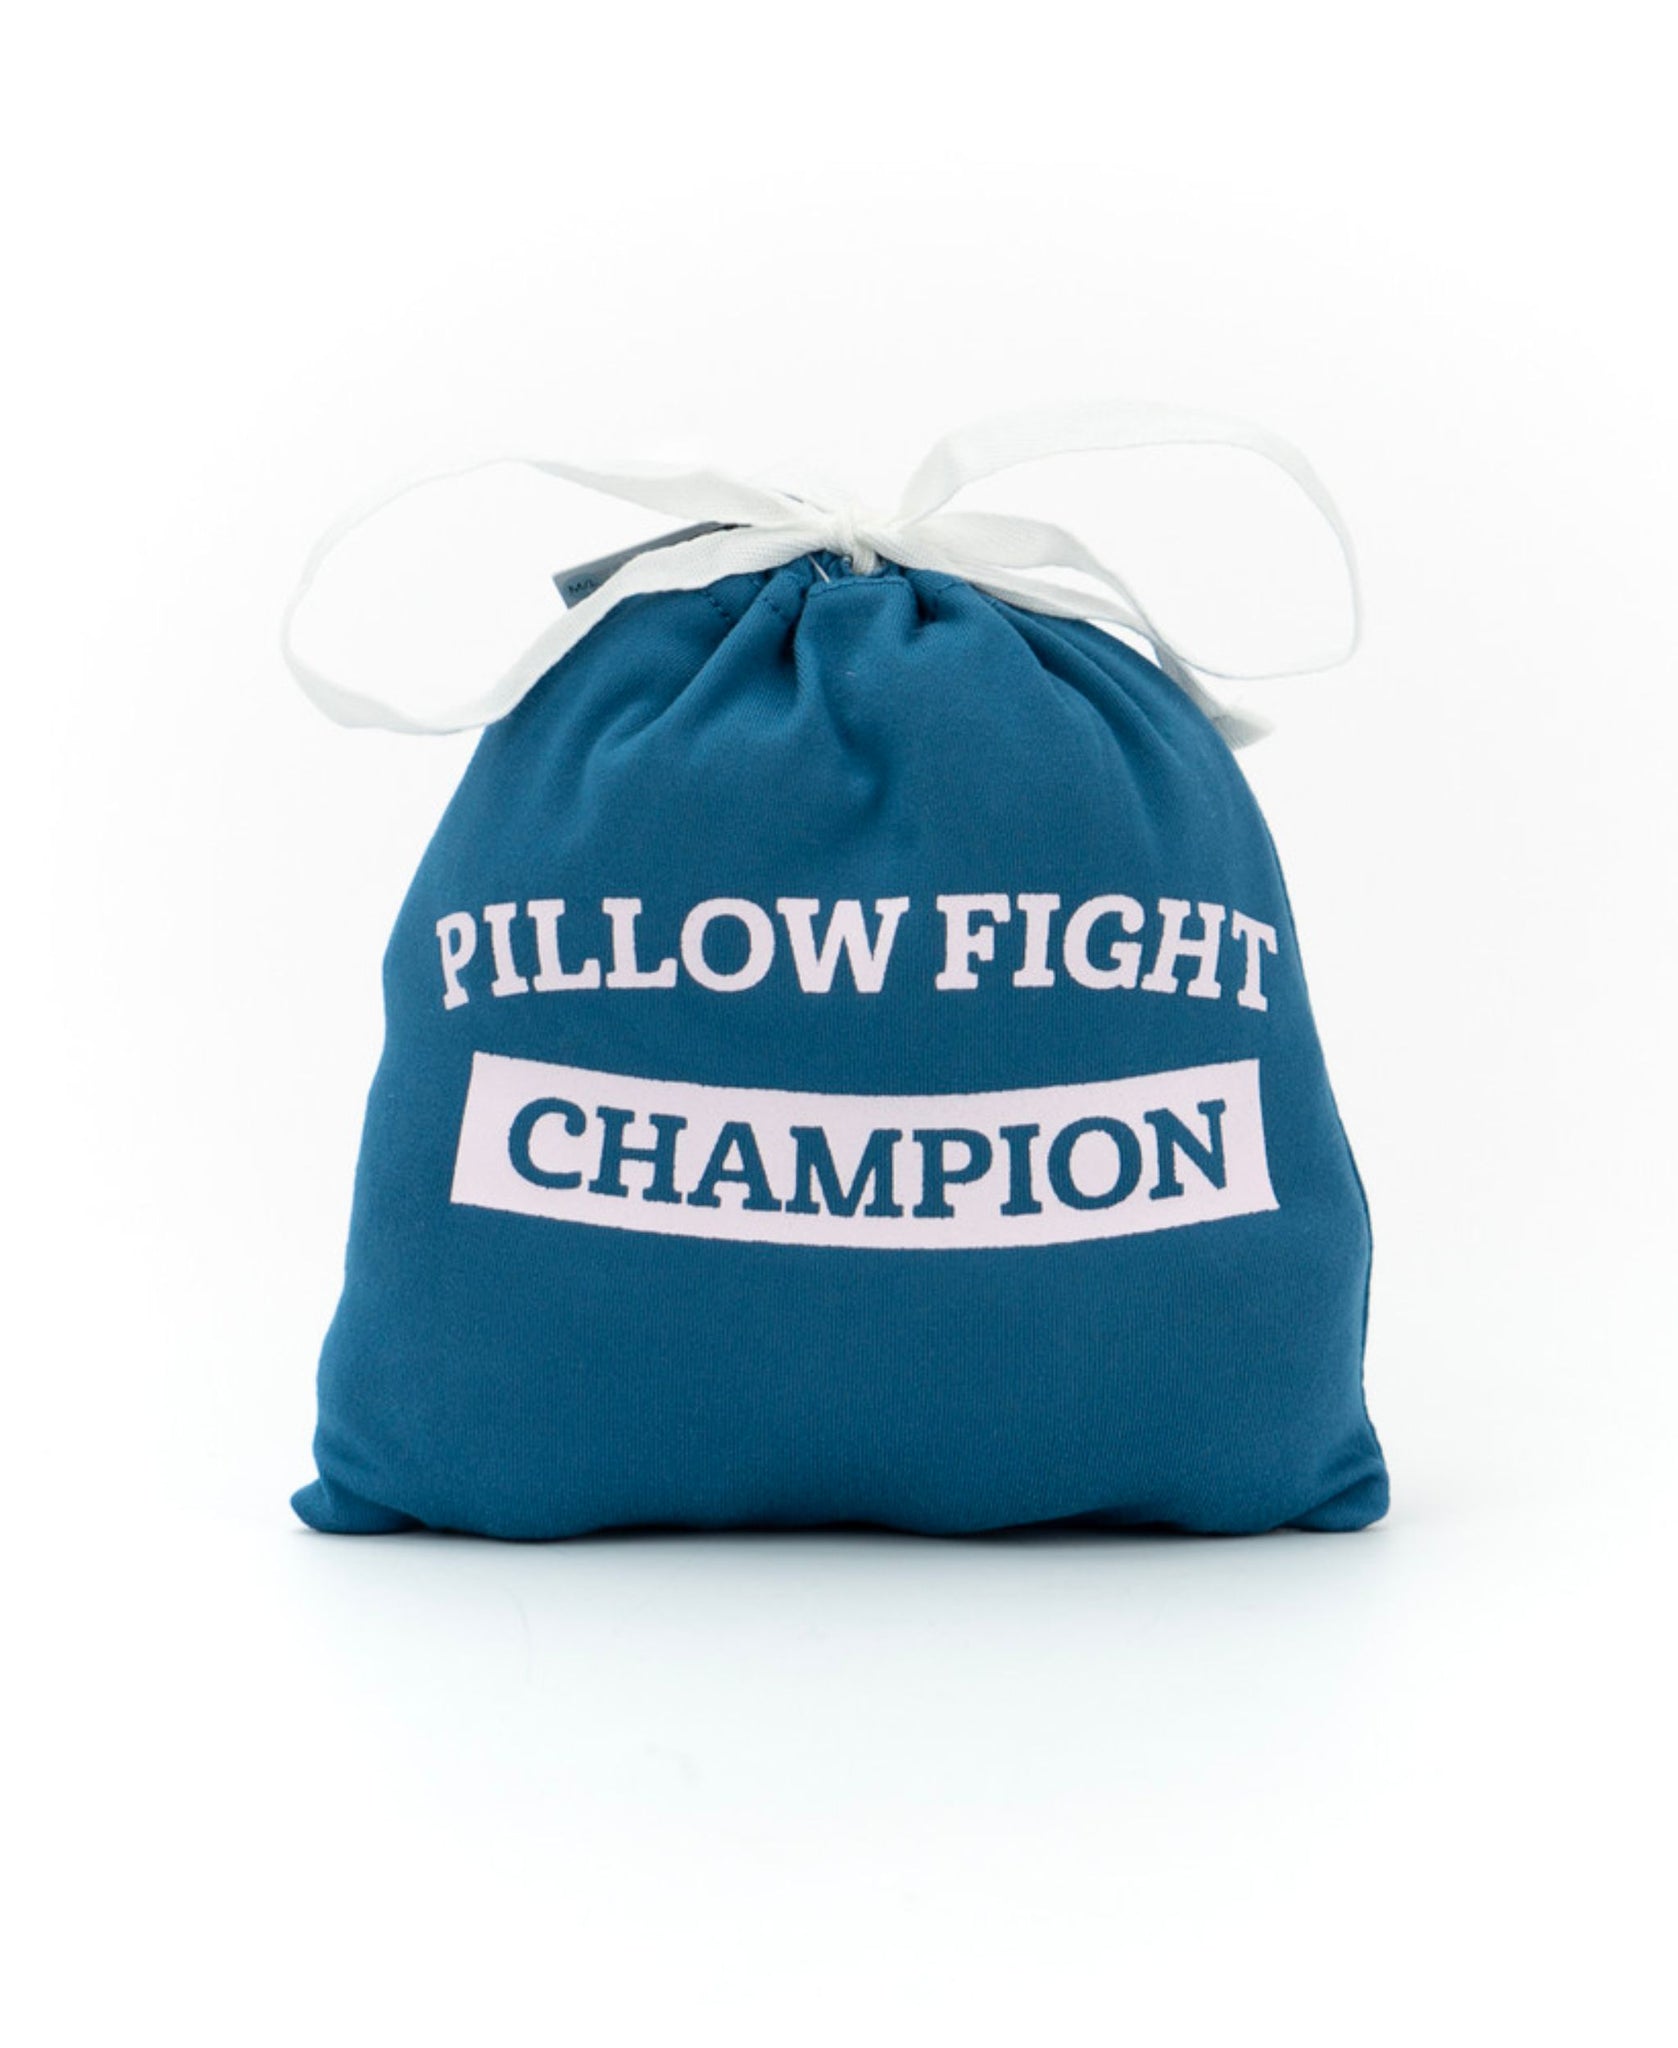 Pillow Fight Champion -- Sleep Shirt